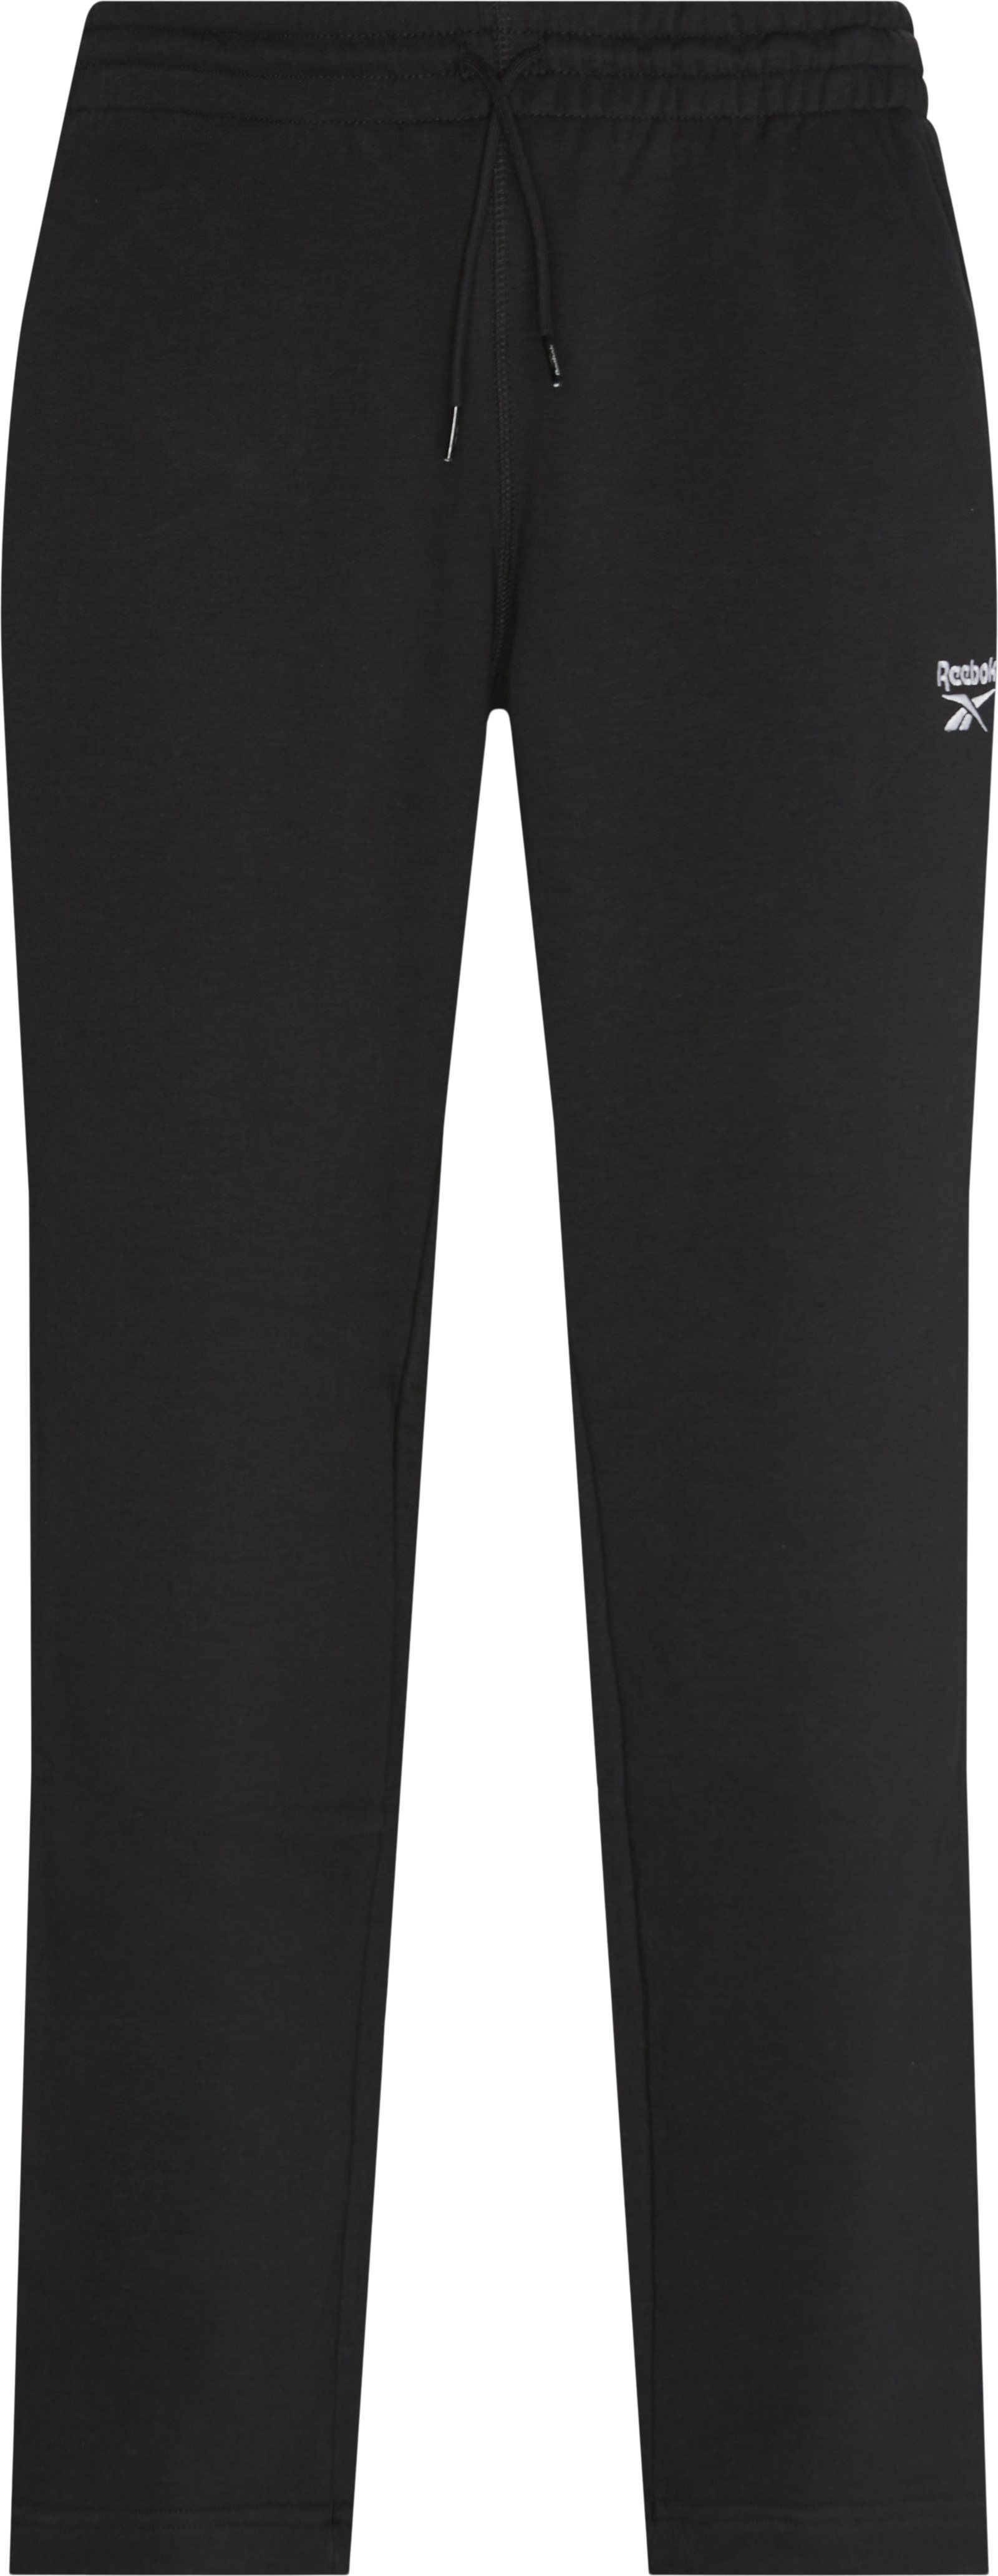 Sweatpants - Trousers - Black